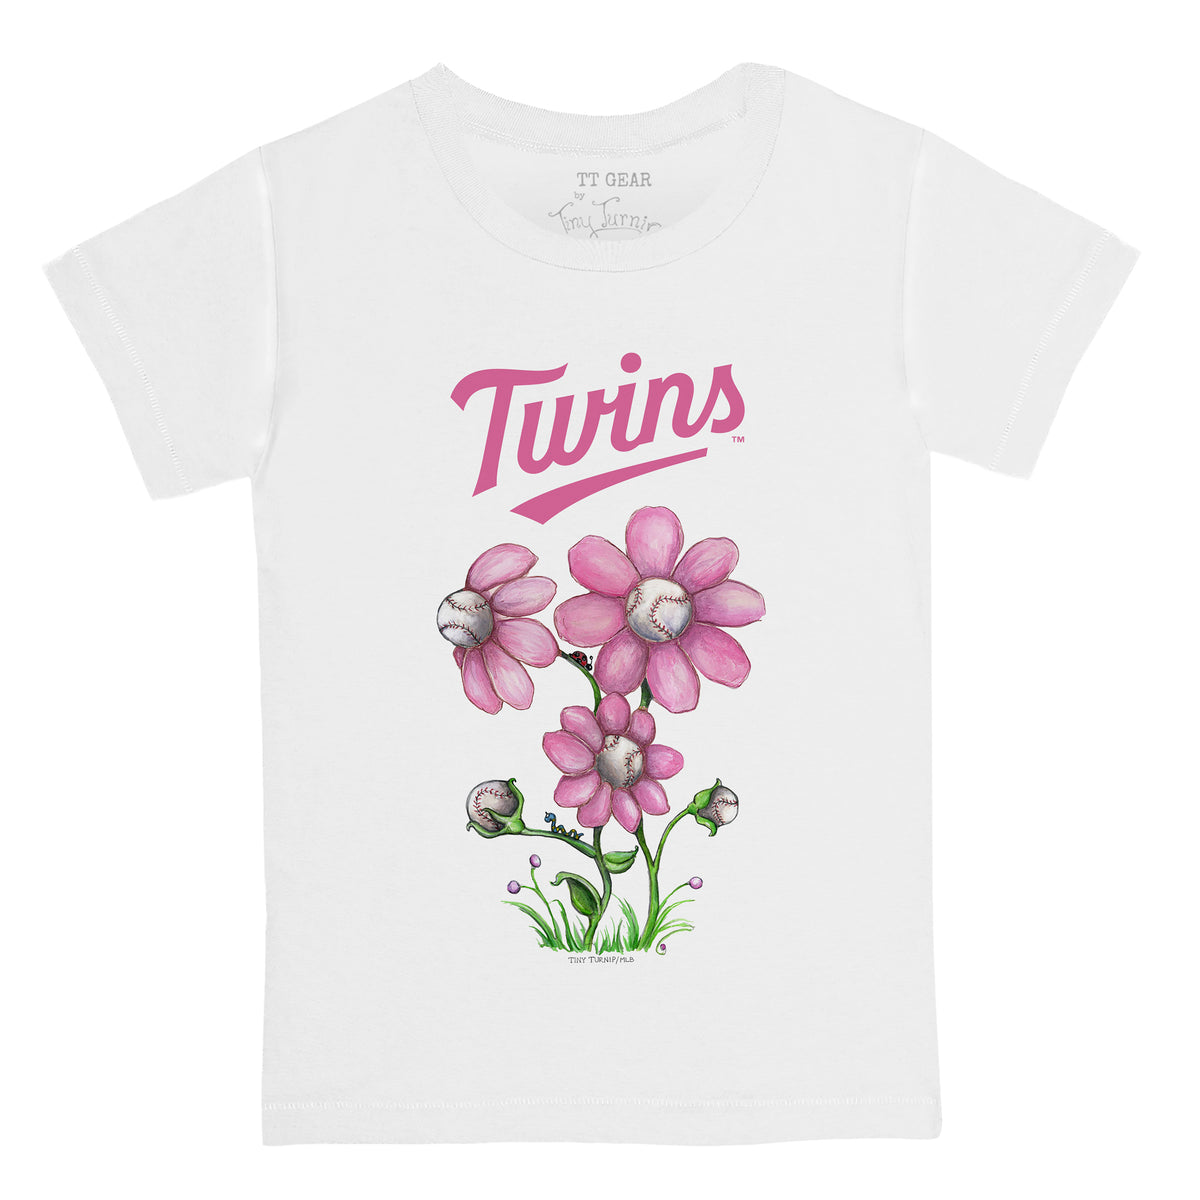 Minnesota Twins Blooming Baseballs Tee Shirt